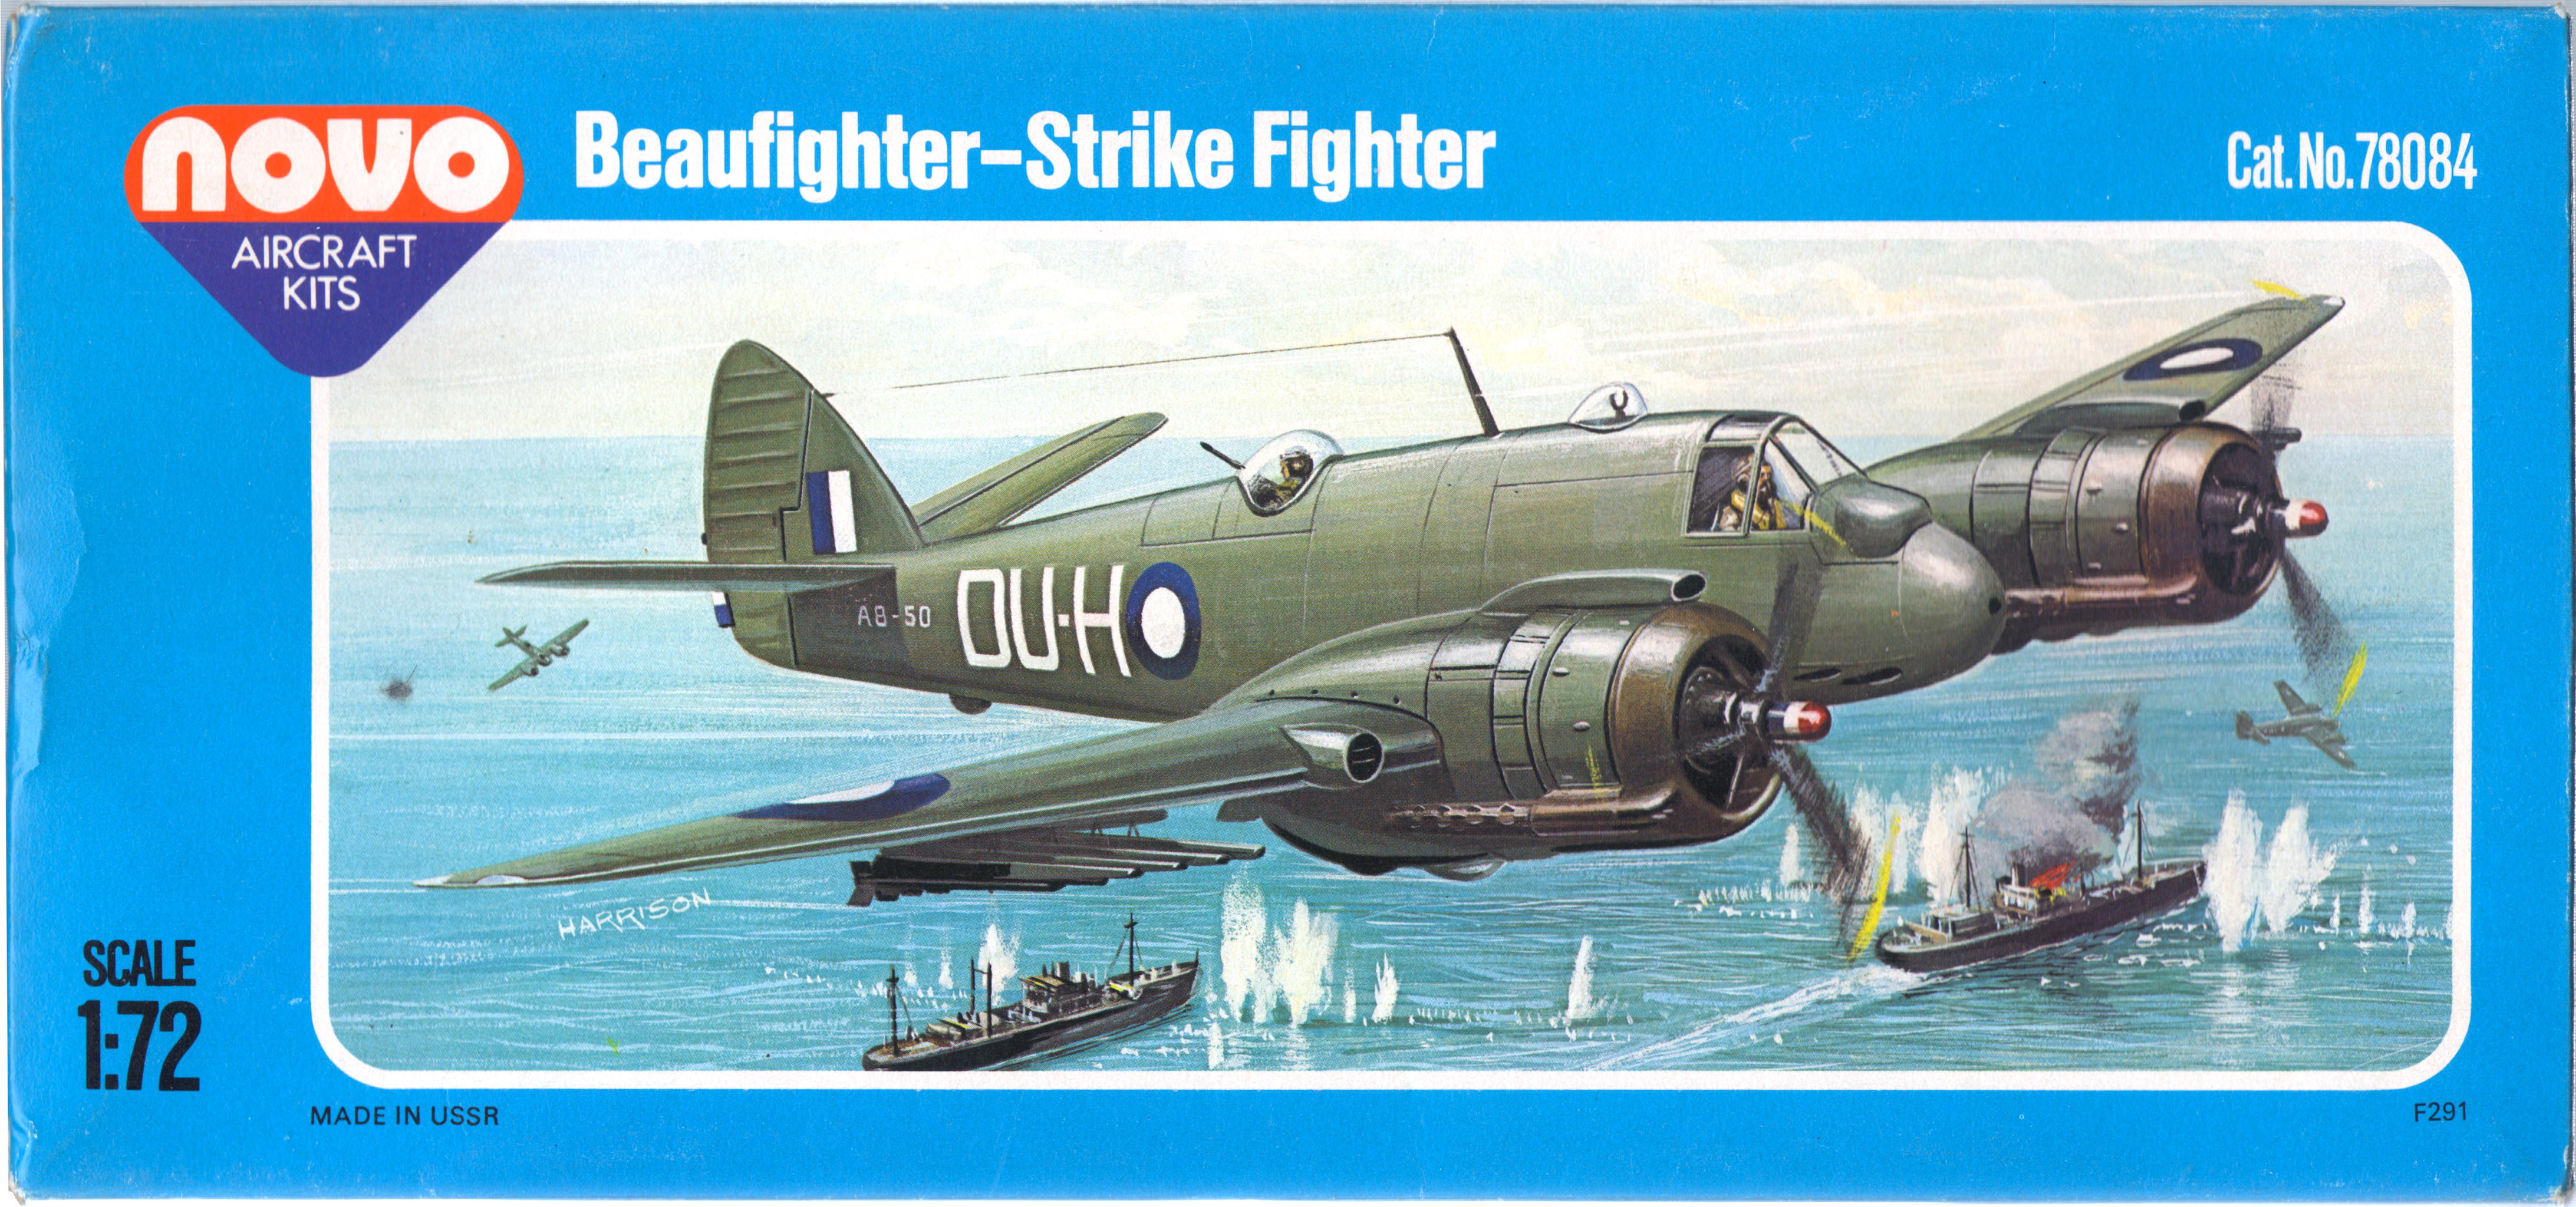  Верх коробки NOVO Toys Ltd F291 Beaufighter Mk.21